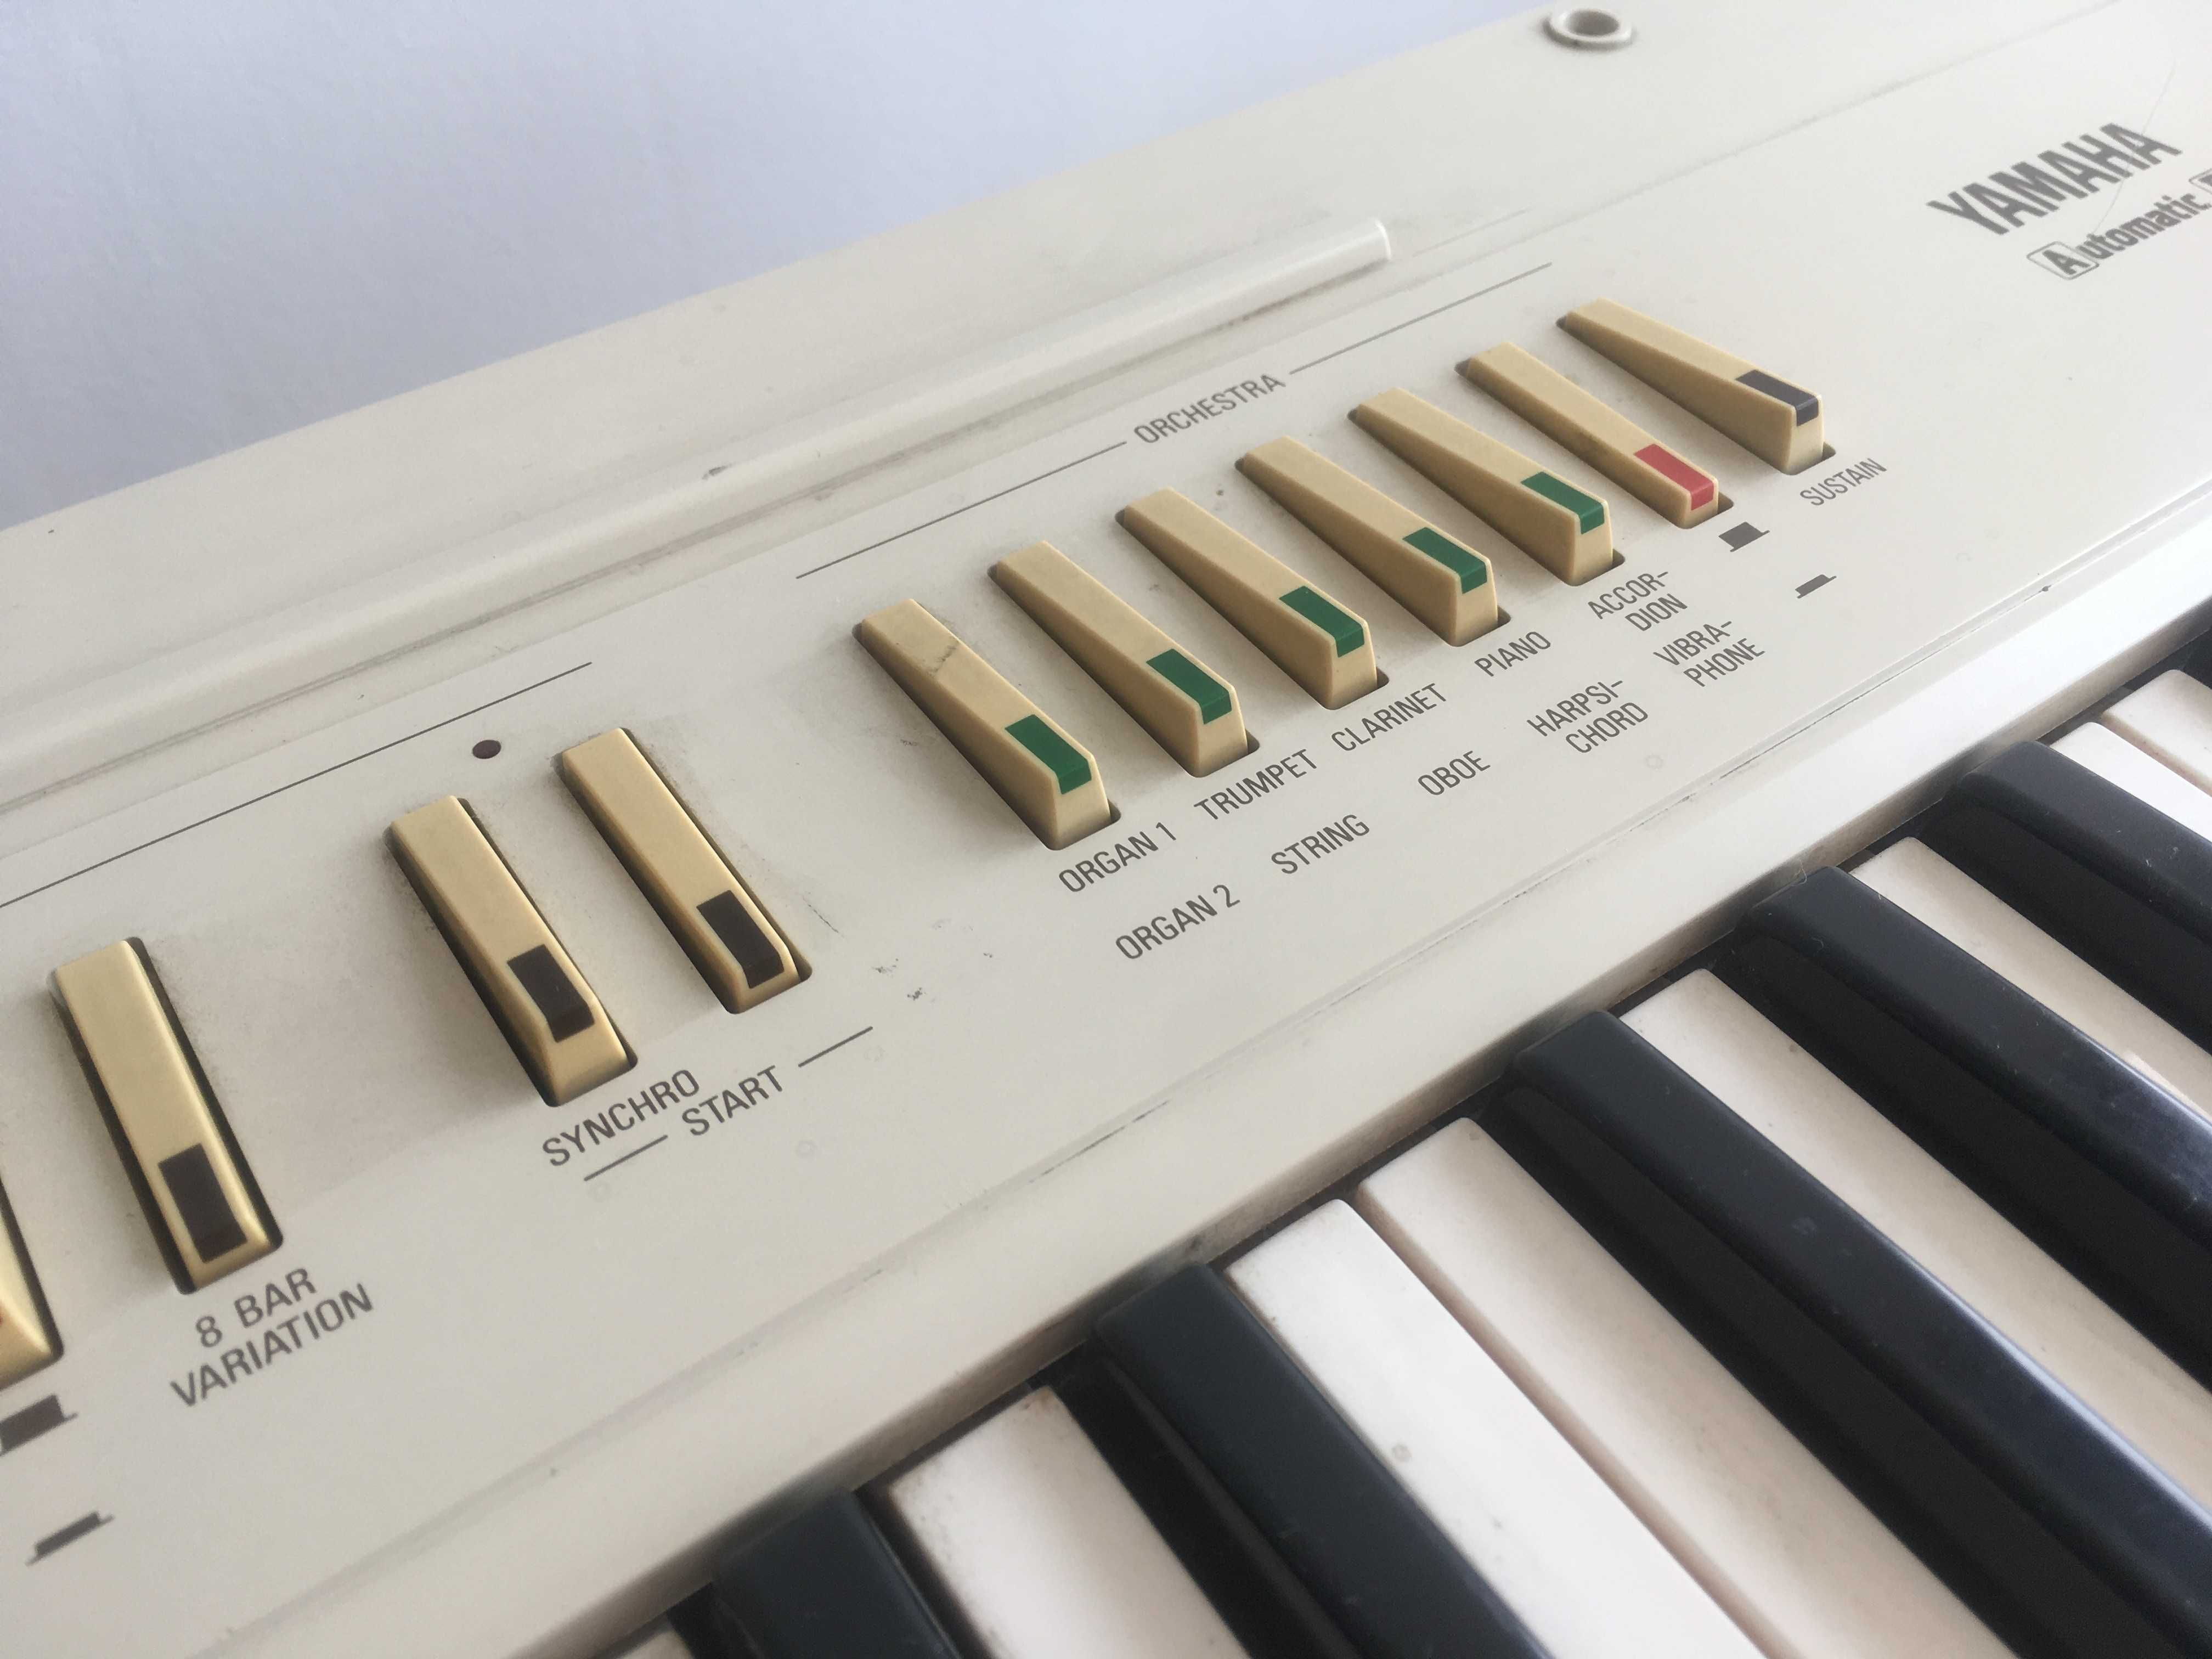 Yamaha PS-20, keyboard analogowy z 1981 roku